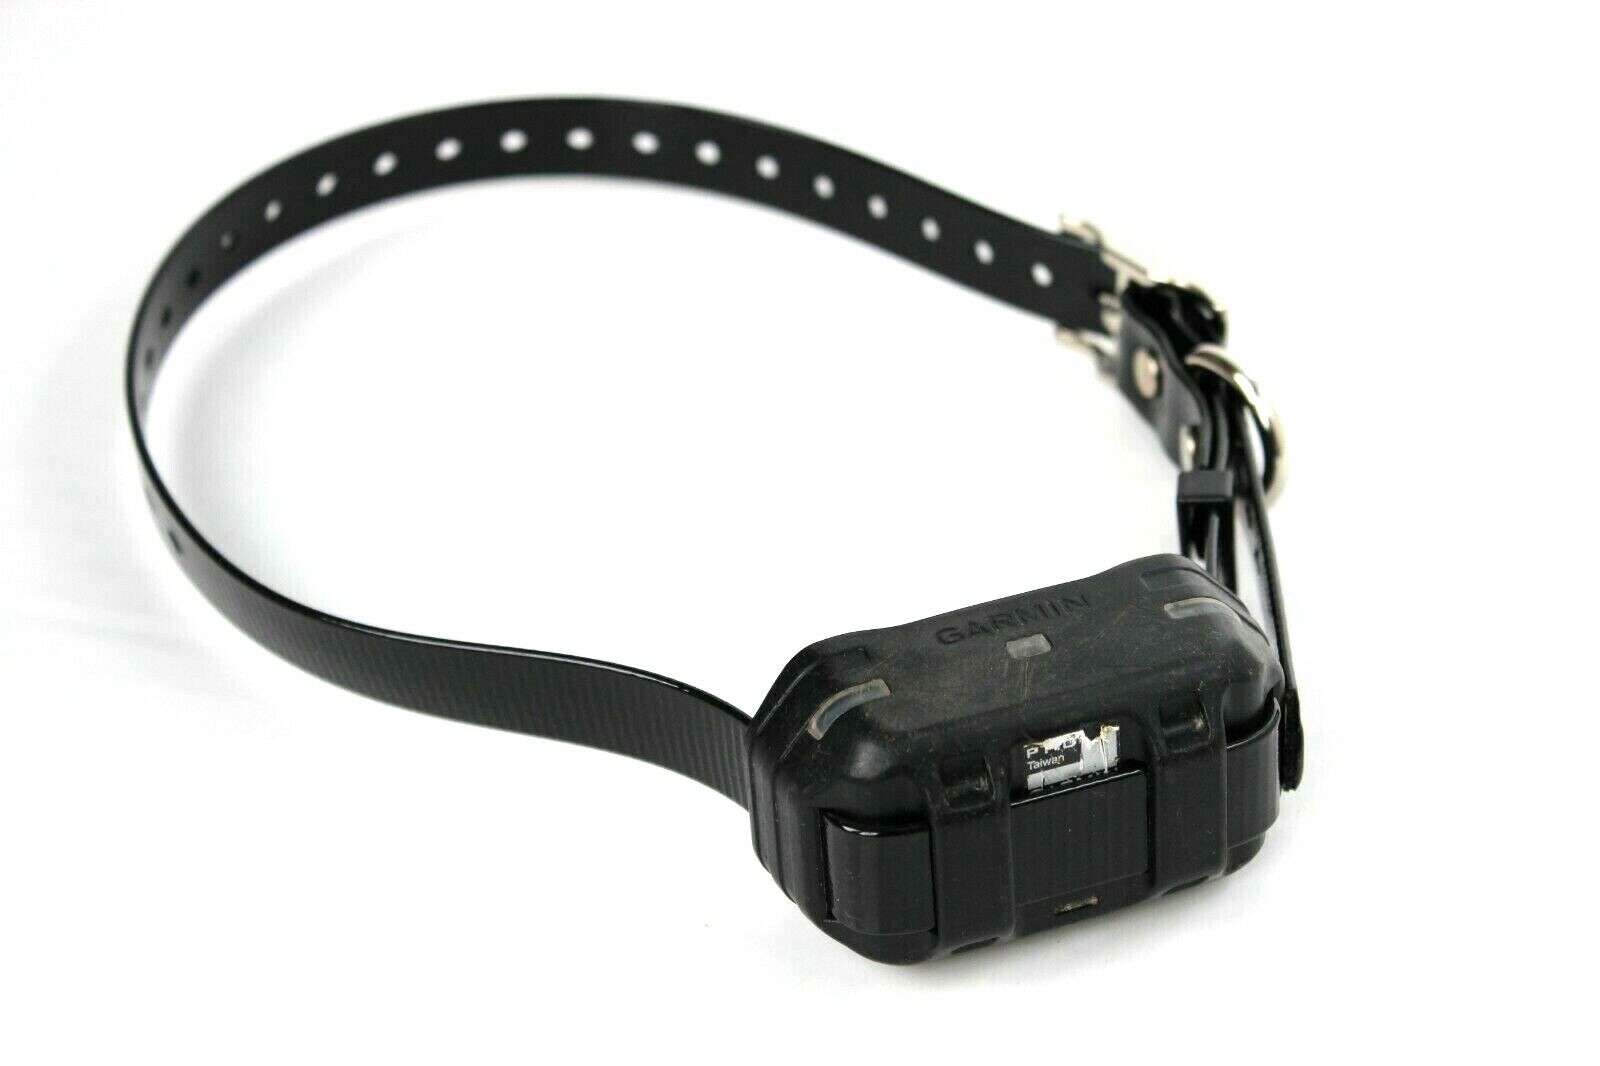 Garmin PRO Series PT10 Training Collar - Good Condition, New Black Strap